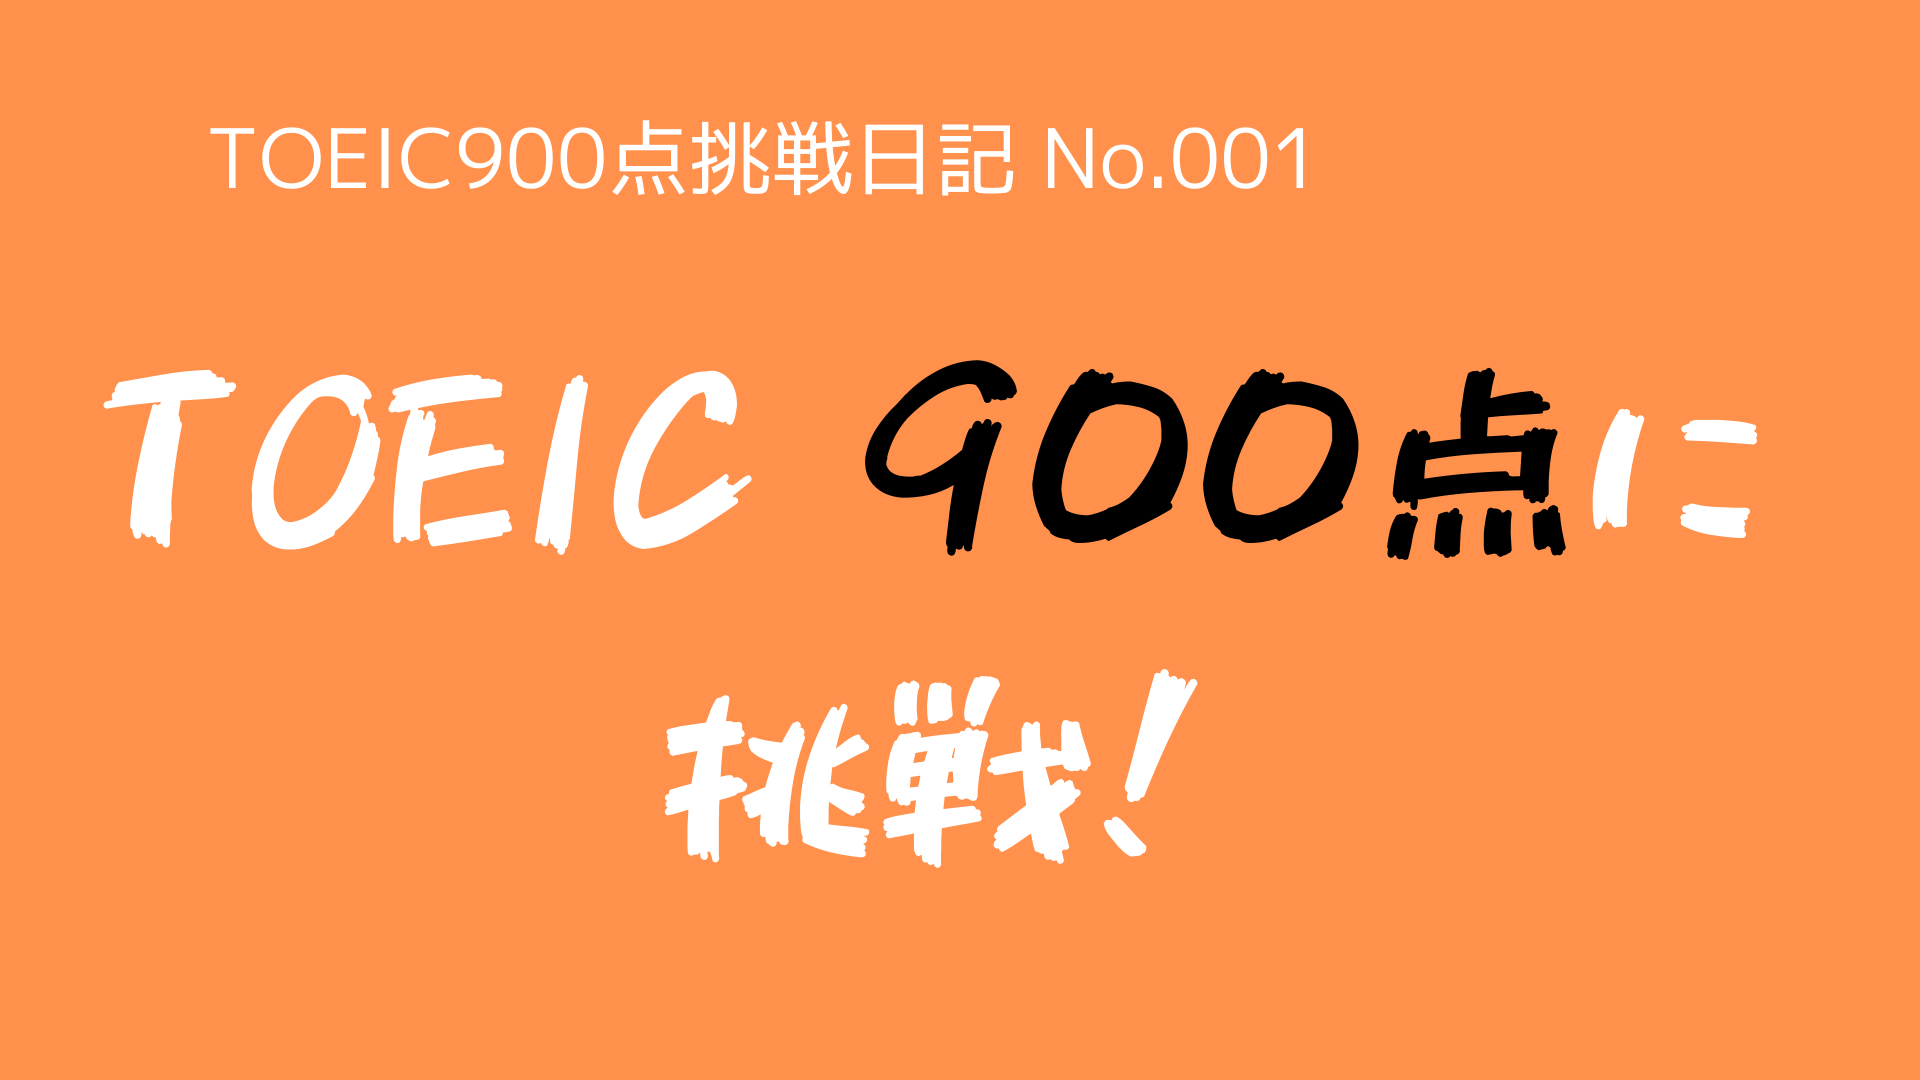 （TOEIC900点挑戦日記-No.001）『TOEIC900点』に挑戦します！